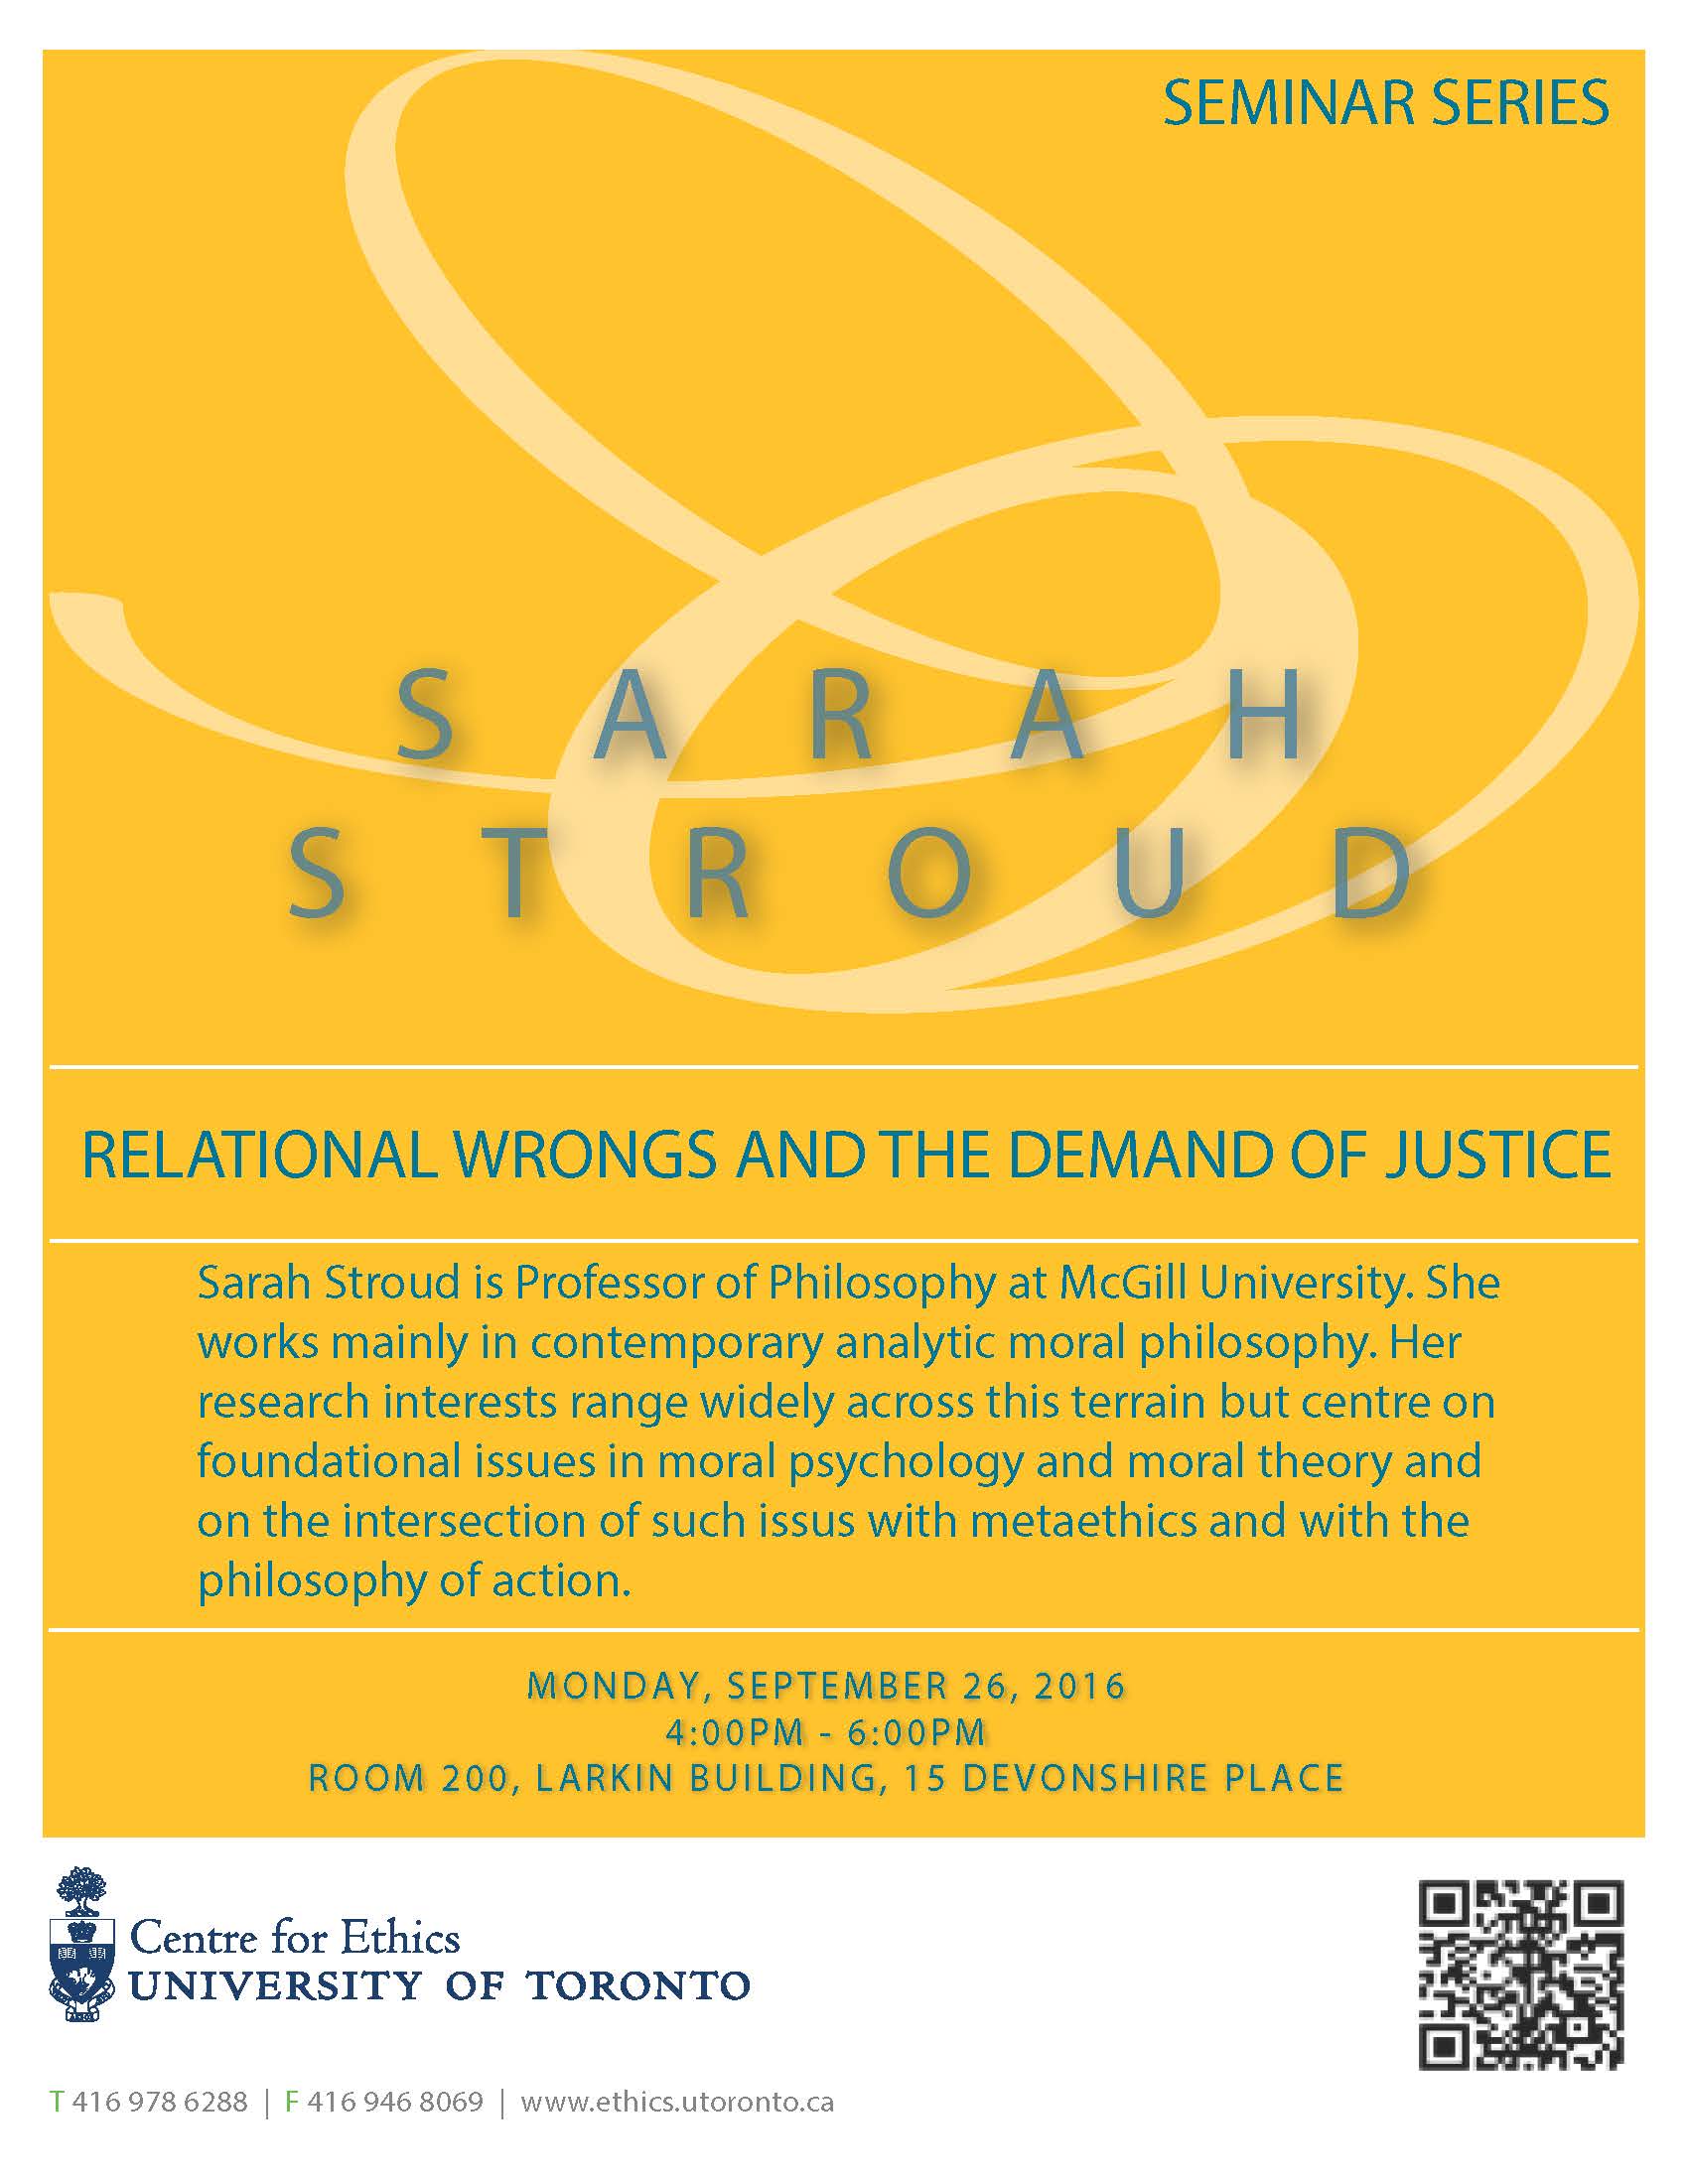 Sarah Stroud, Department of Philosophy, McGill University